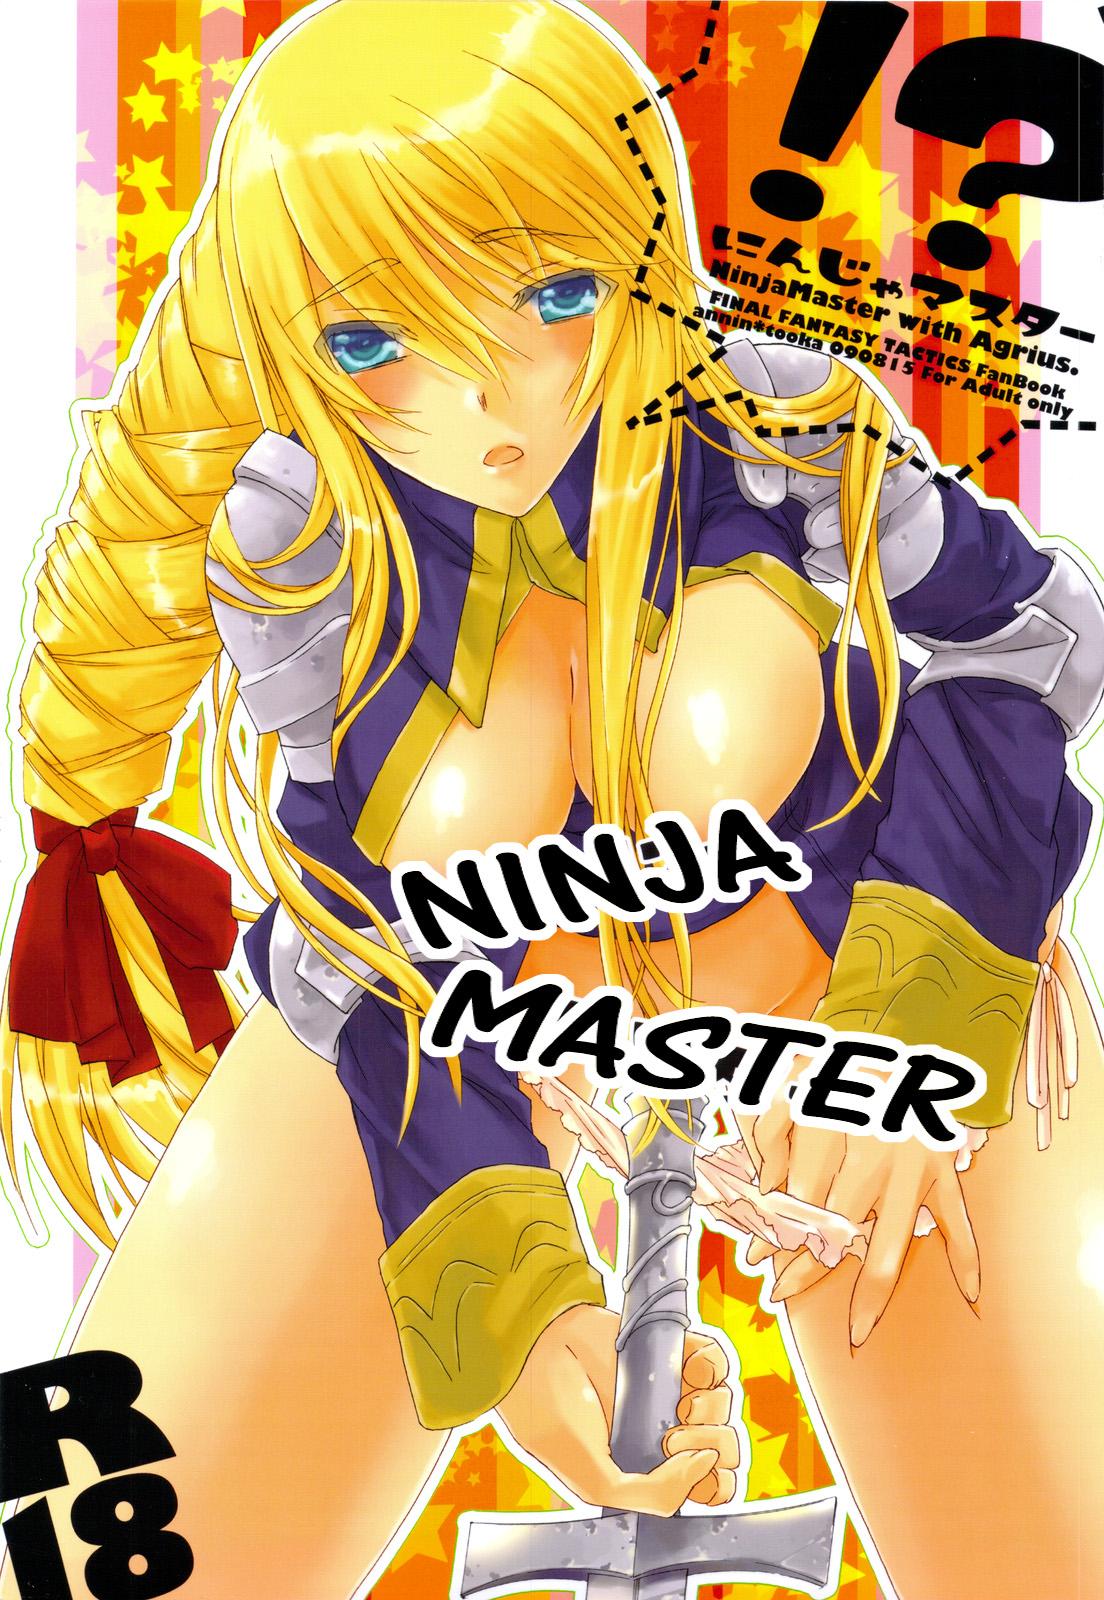 Cheerleader Ninja Master - Final fantasy tactics Stud - Picture 1